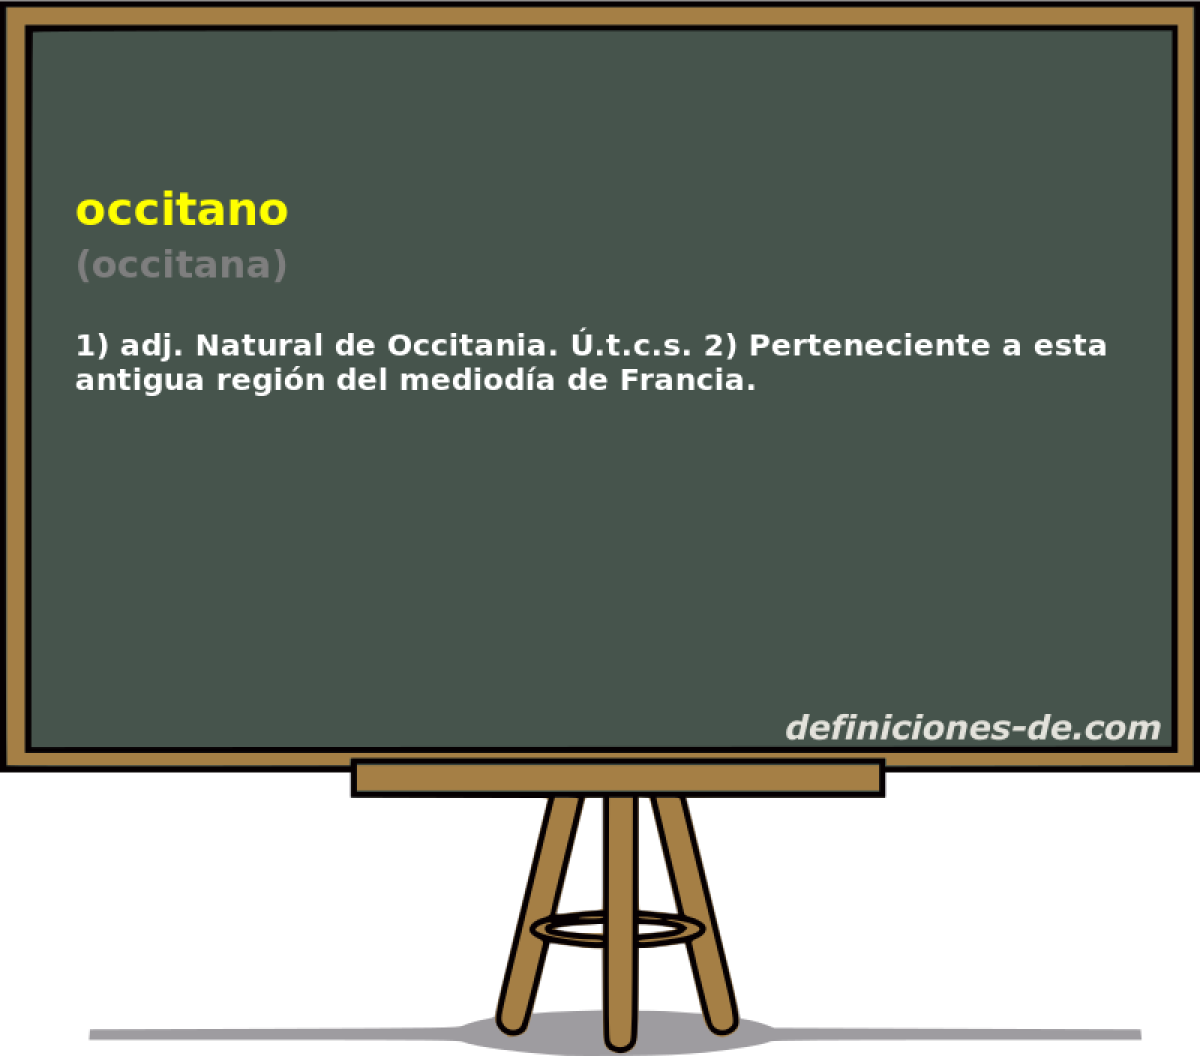 occitano (occitana)